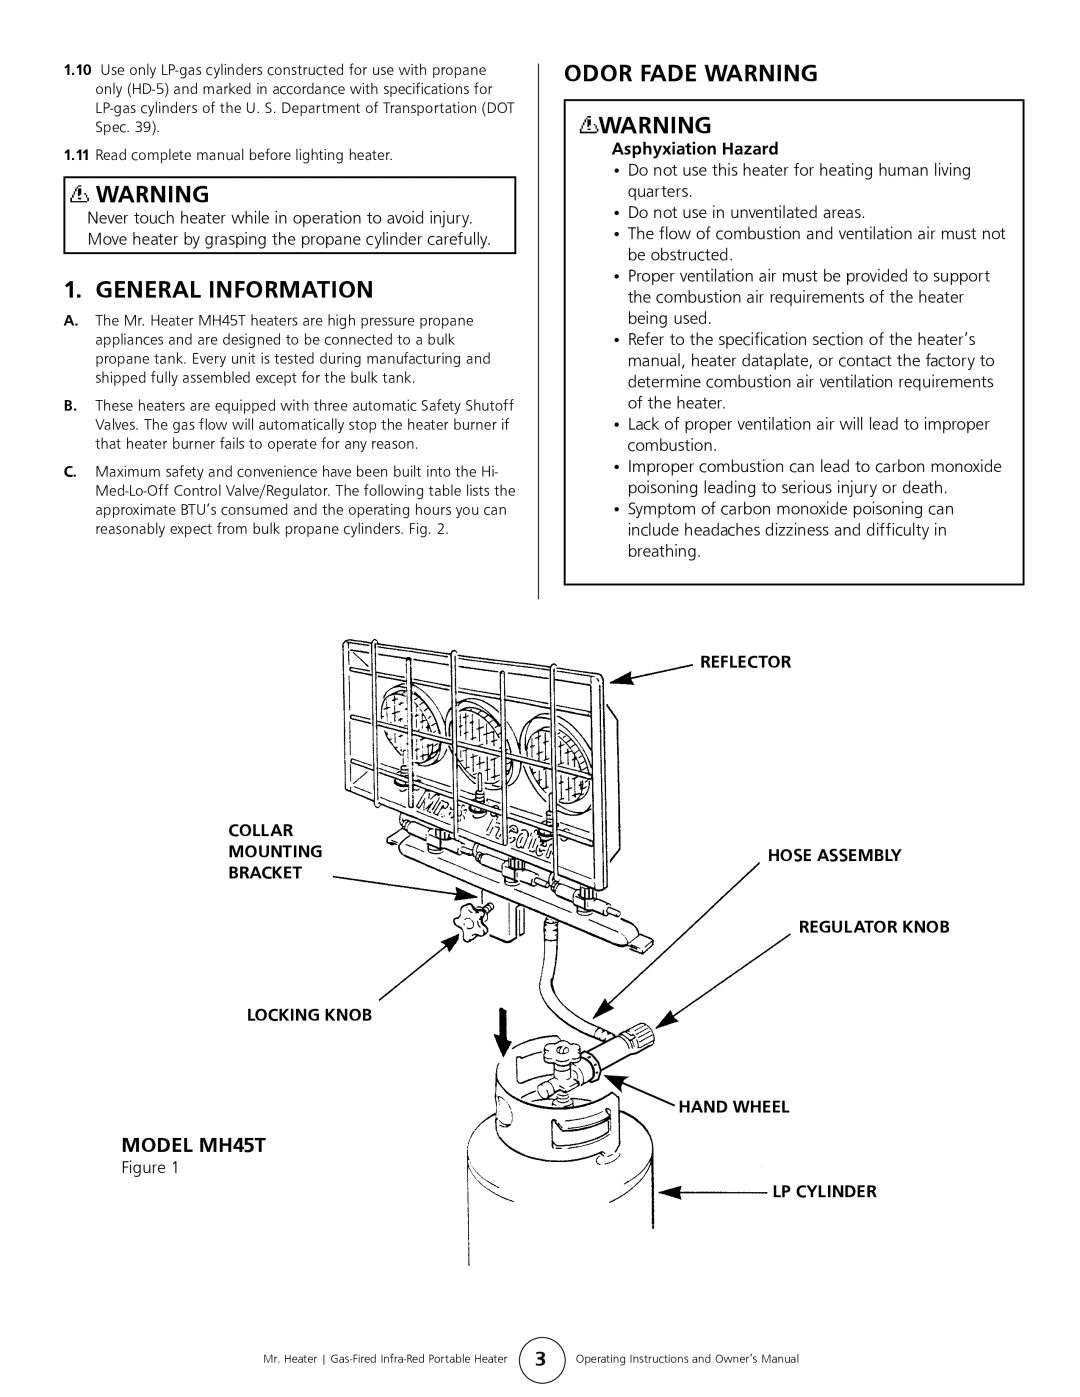 Mr. Heater owner manual General Information, Odor Fade Warning, MODEL MH45T, Collar Mounting Bracket Locking Knob 